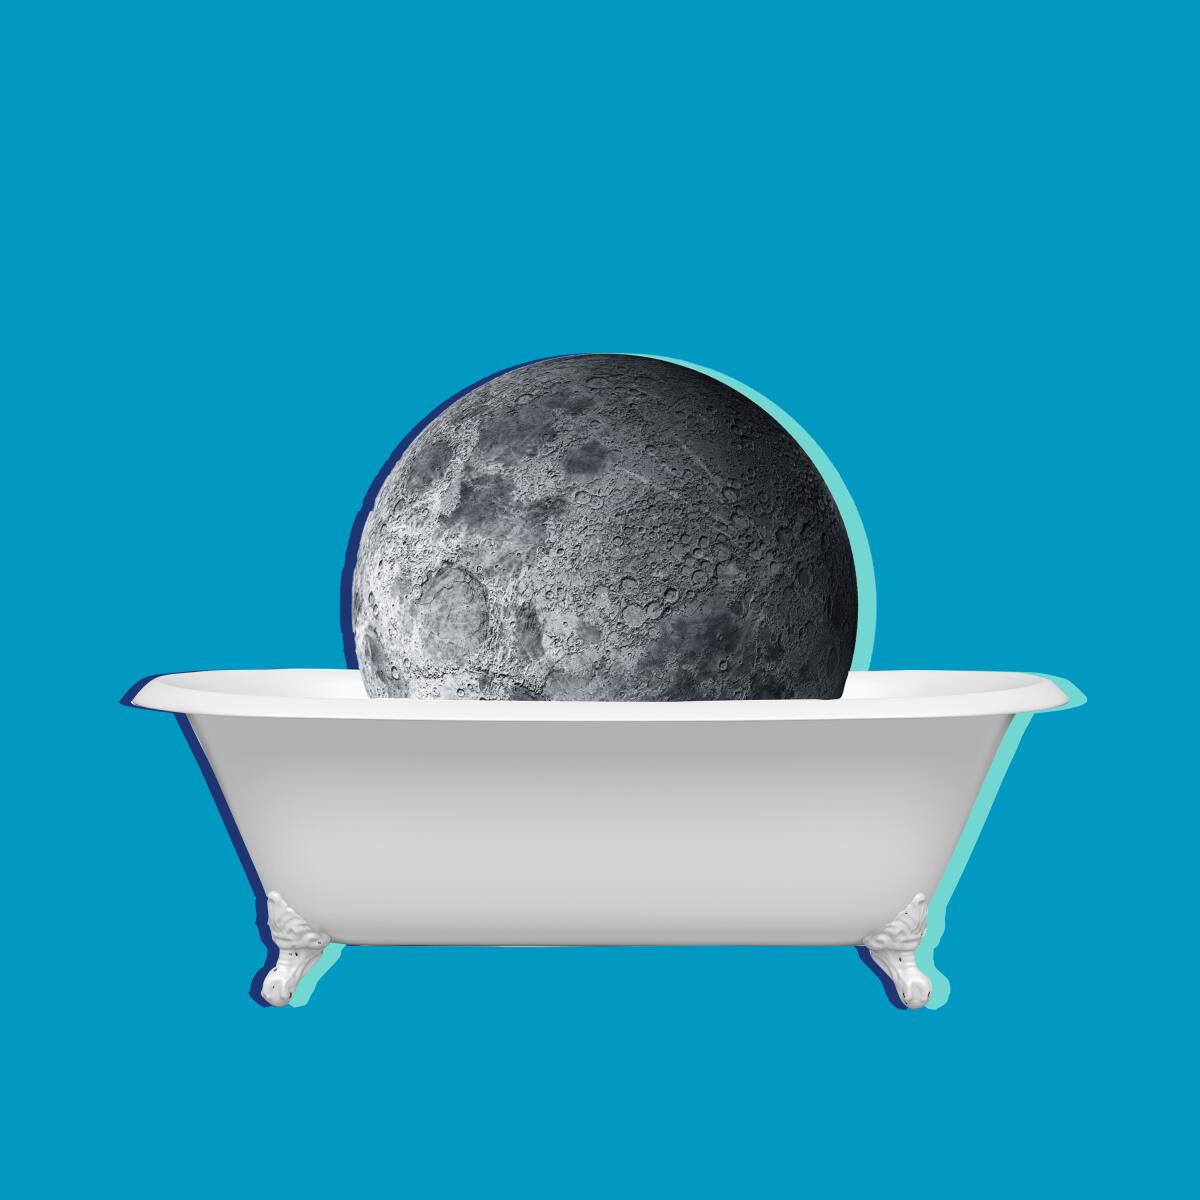 Illustration of the moon sitting in a bathtub